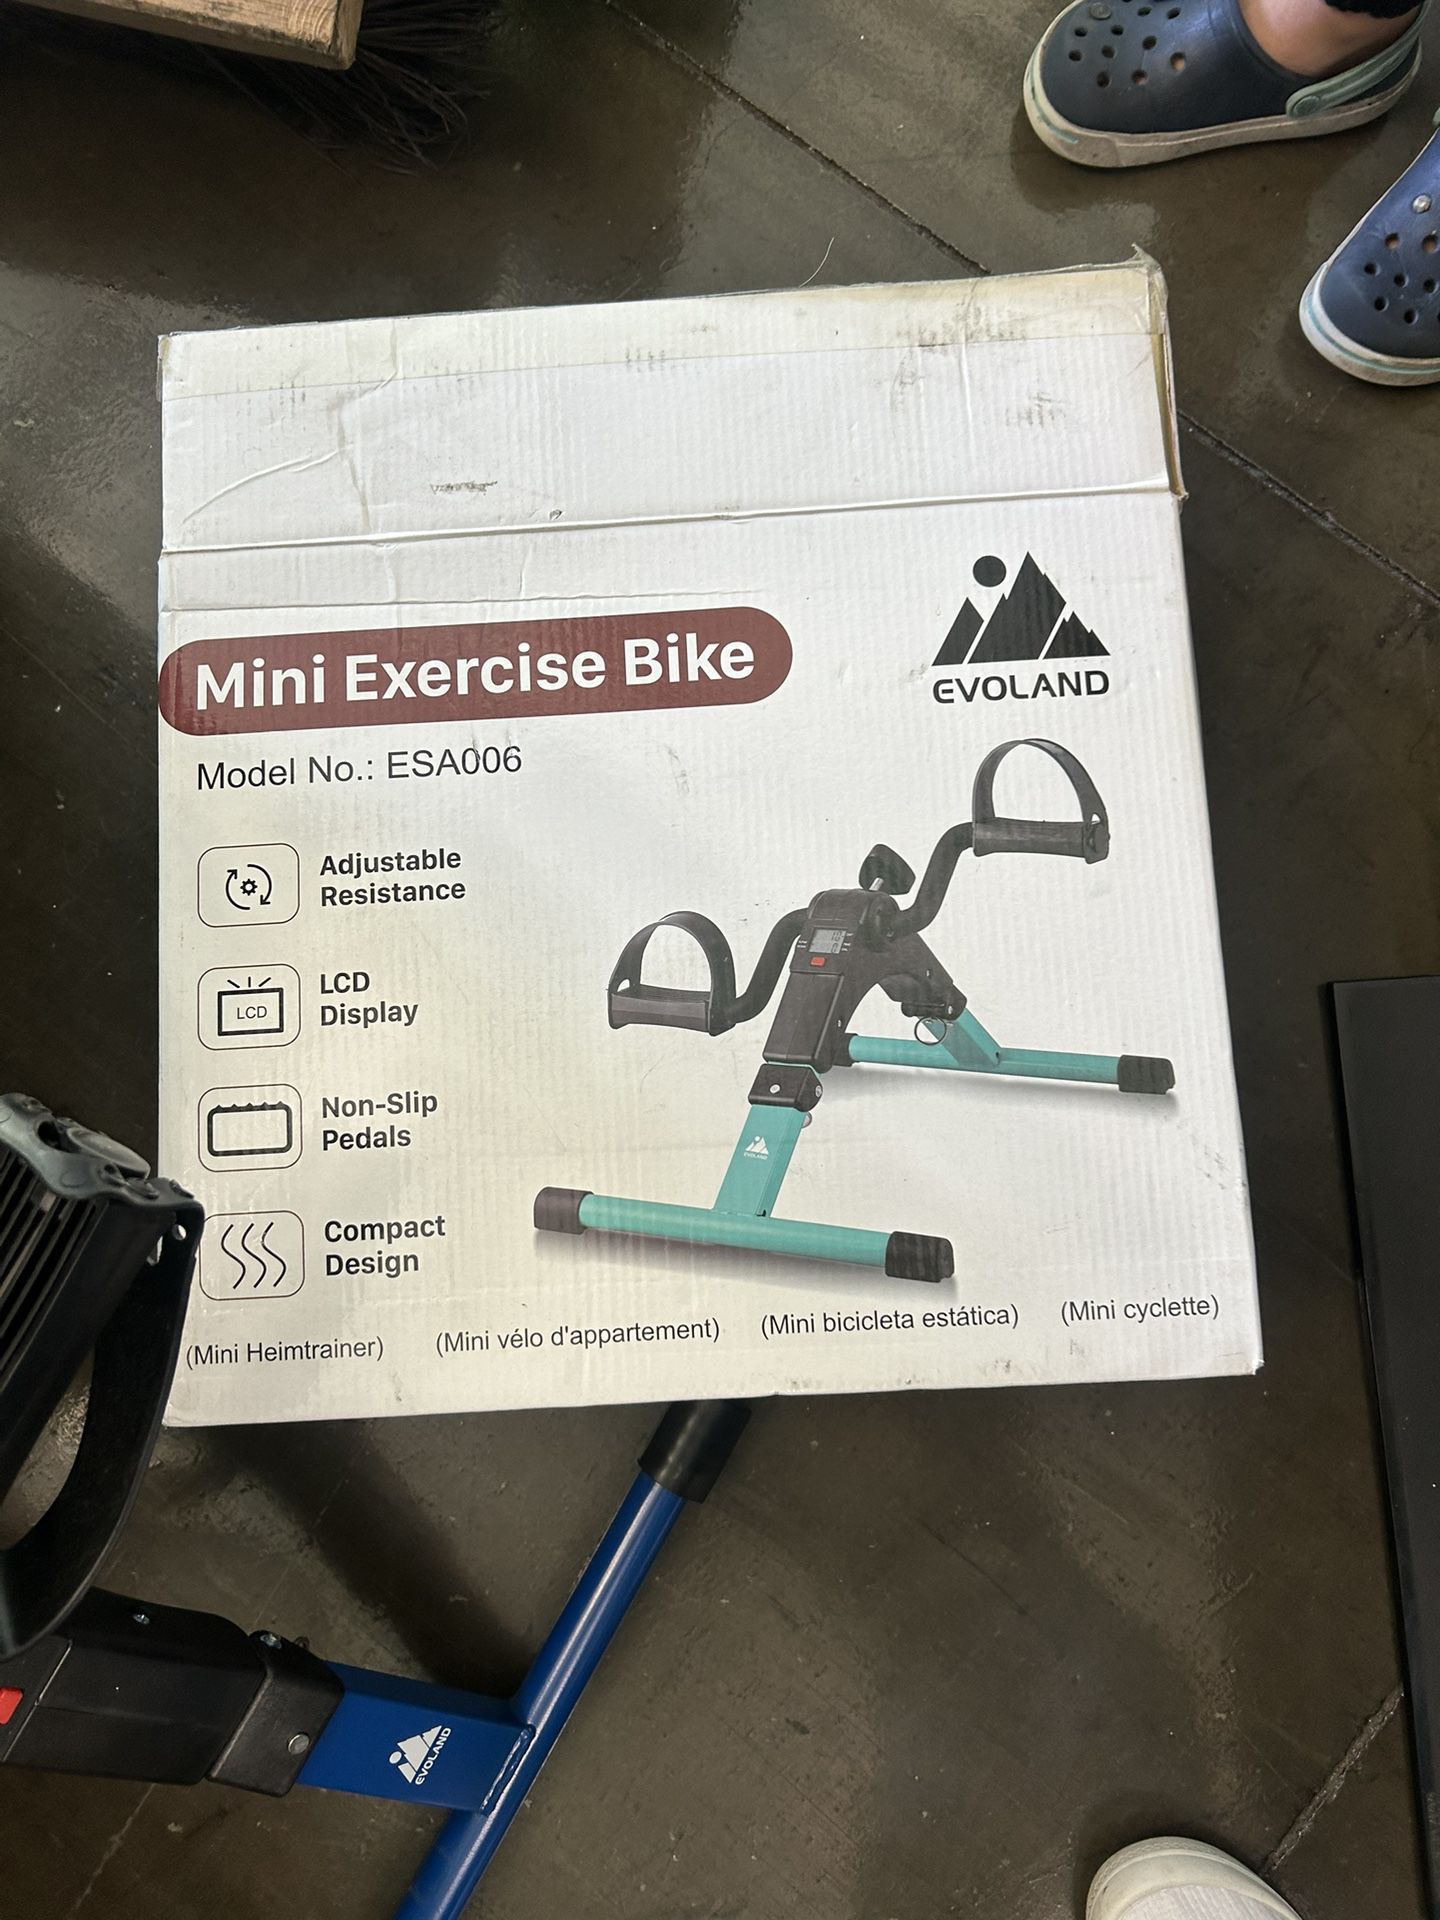 Mini Exercise Bike $20